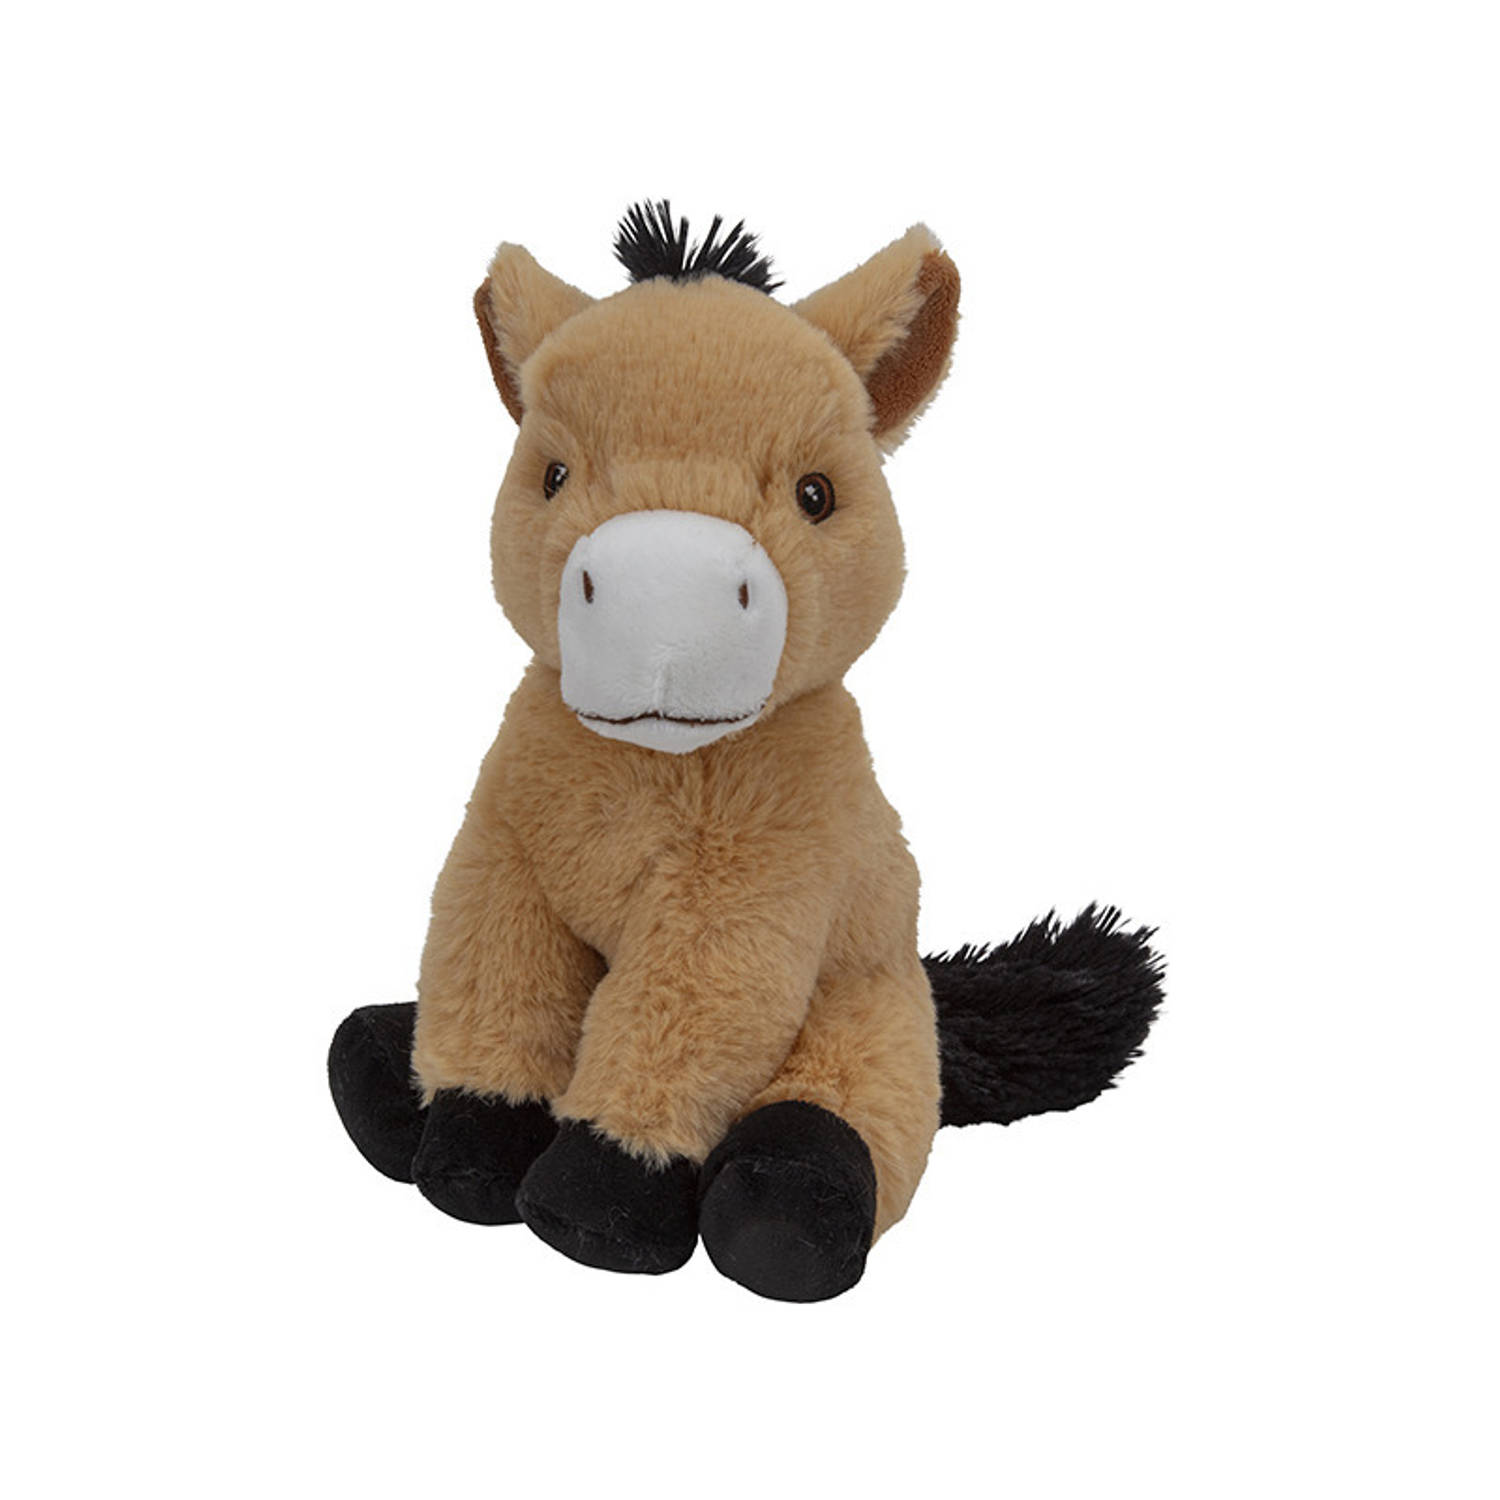 Pluche dieren knuffels Paard van 23 cm - Knuffeldieren speelgoed